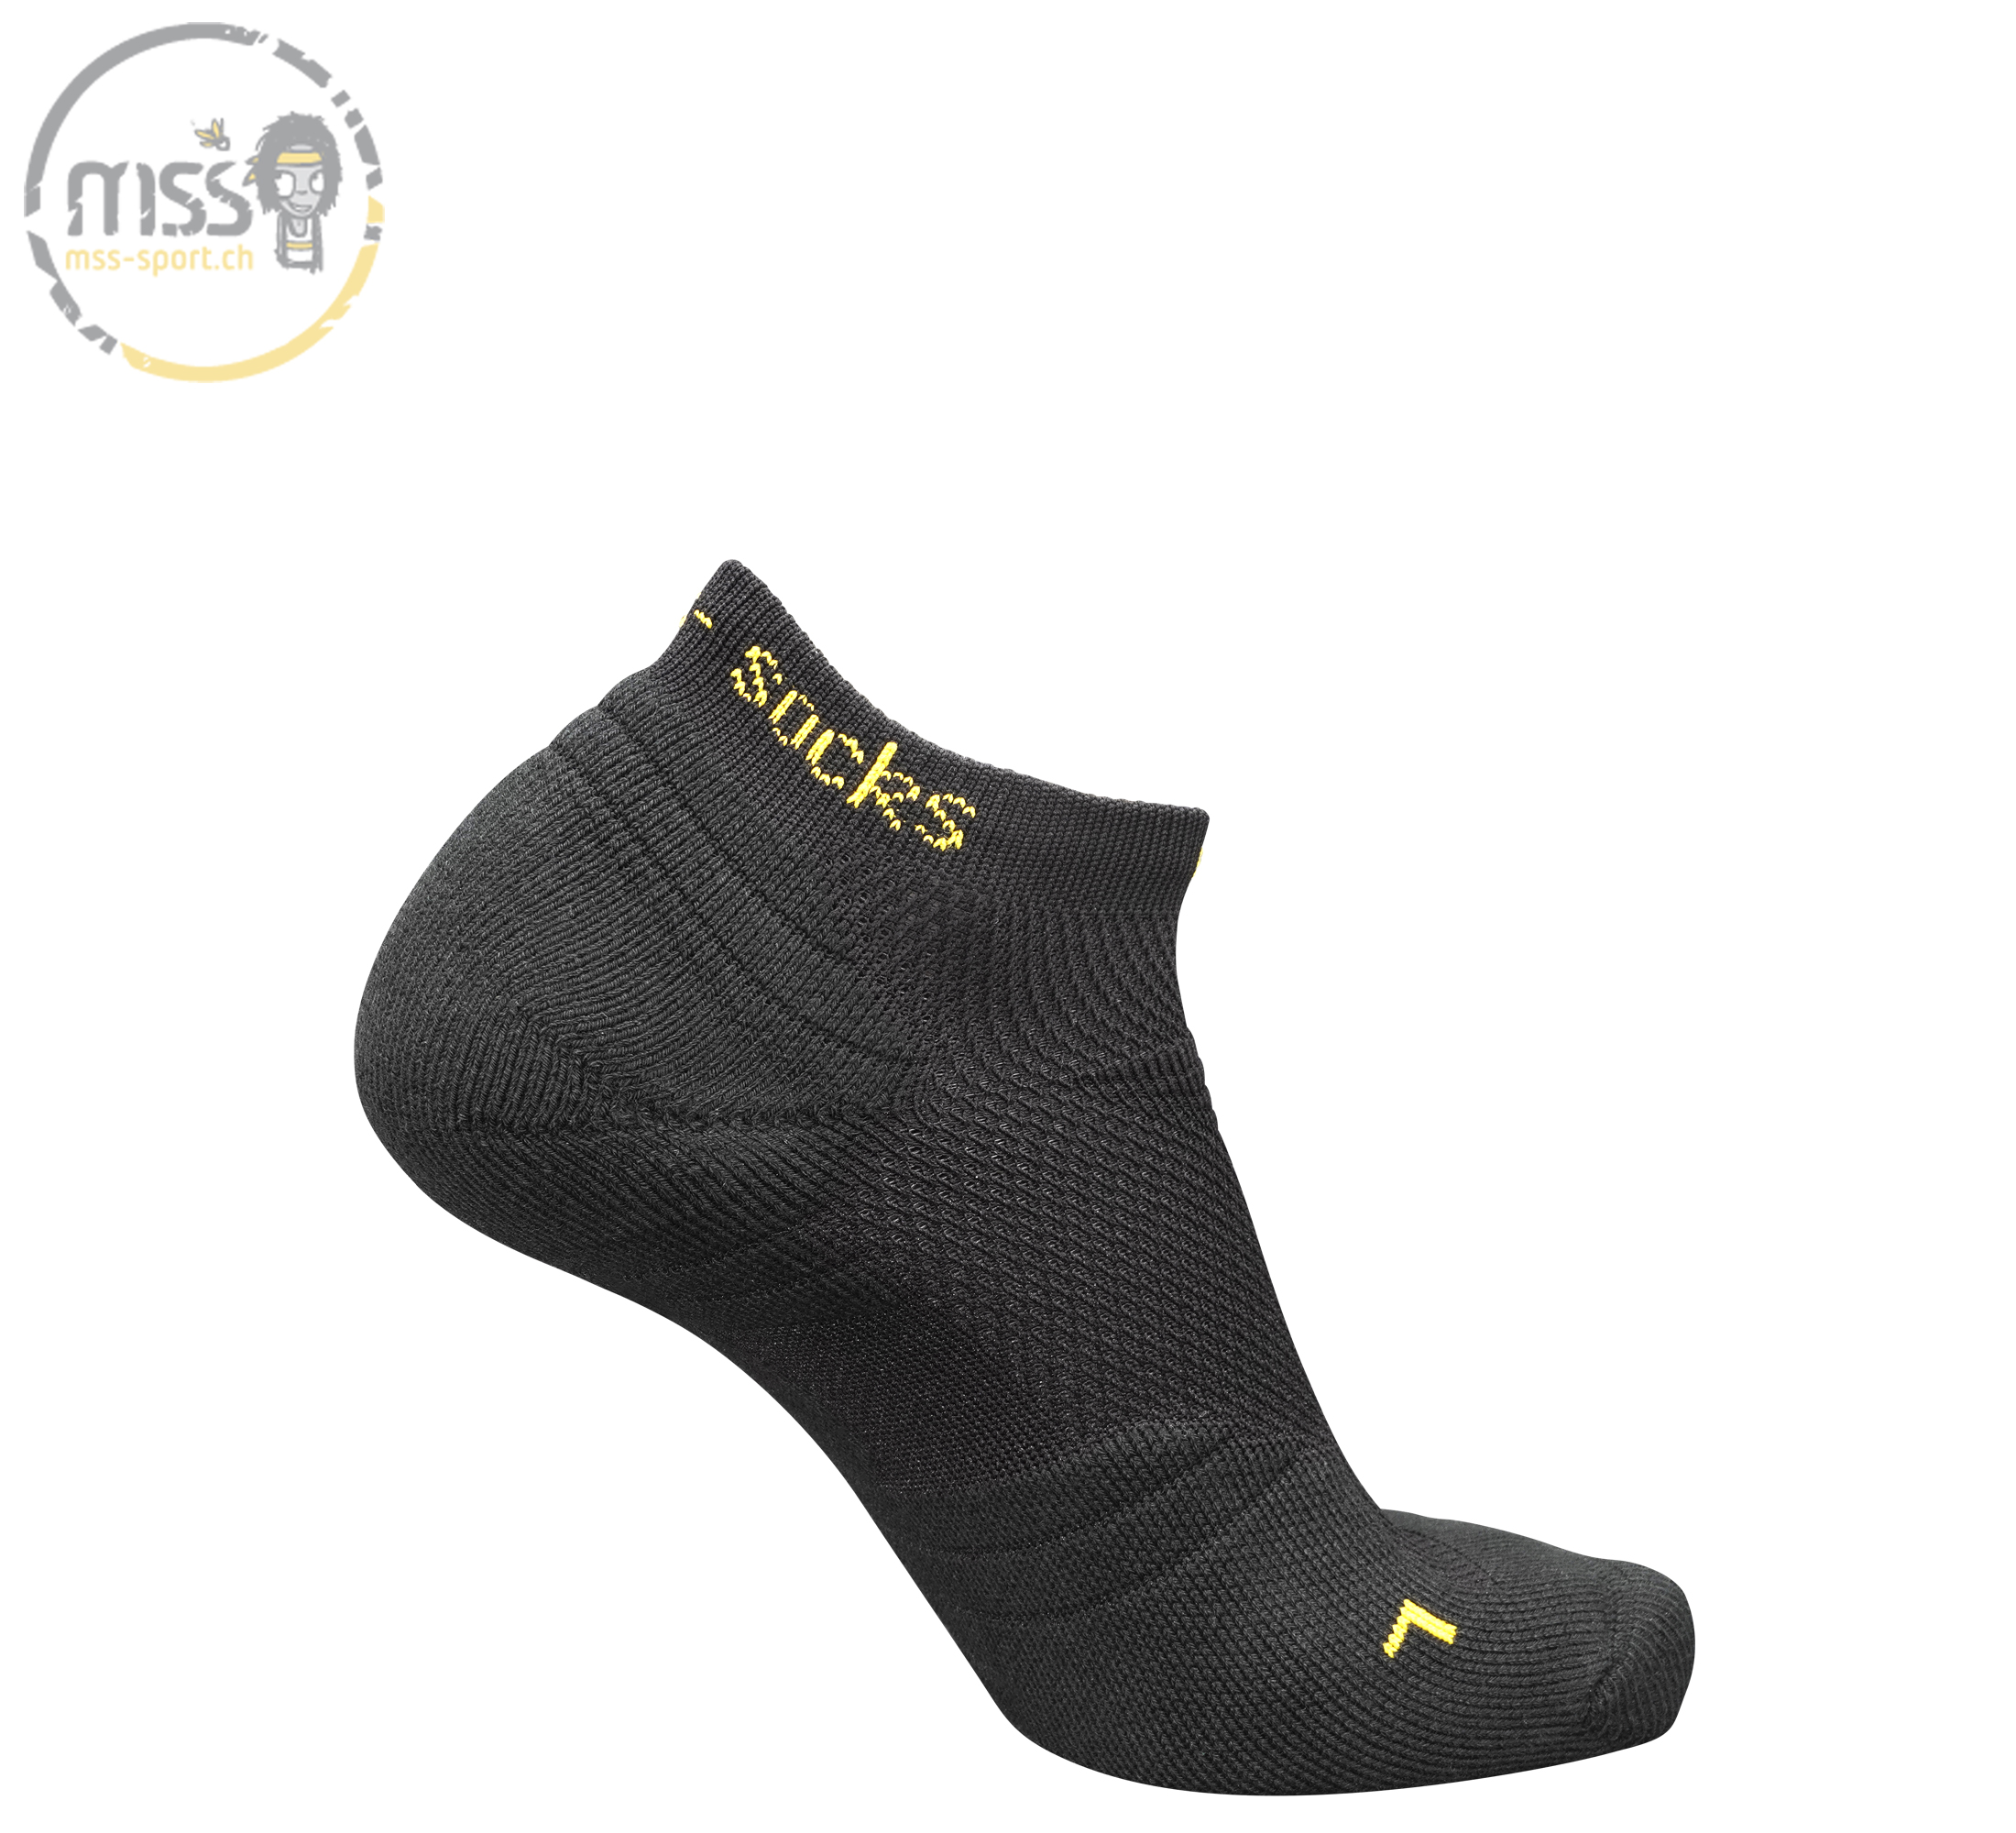 mss-socks Smash 5300 low Lady black